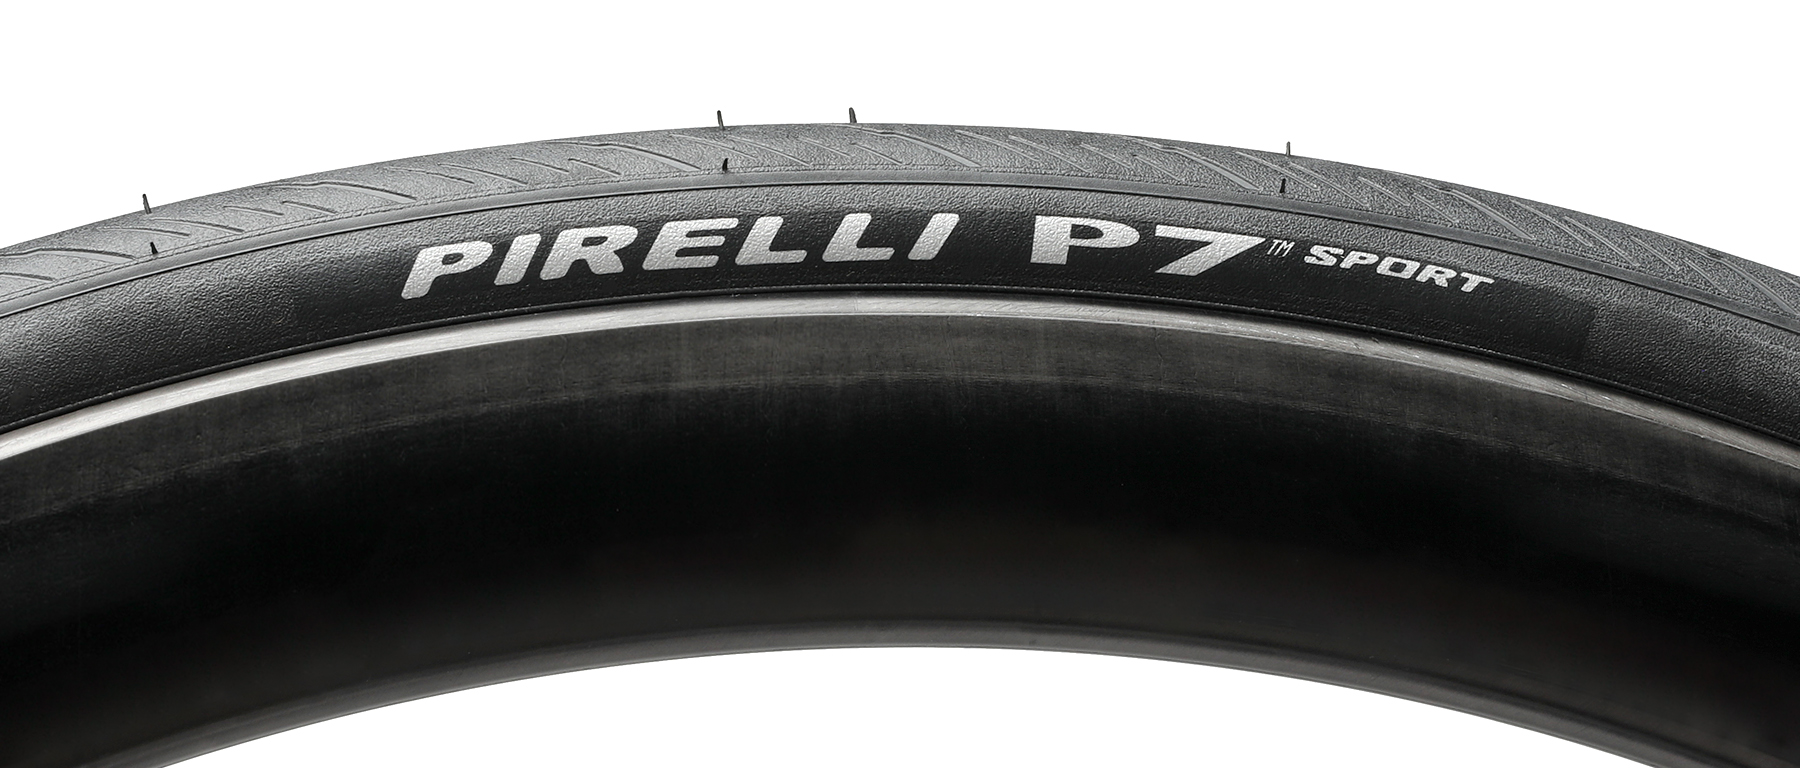 Pirelli P7 Sport Tire